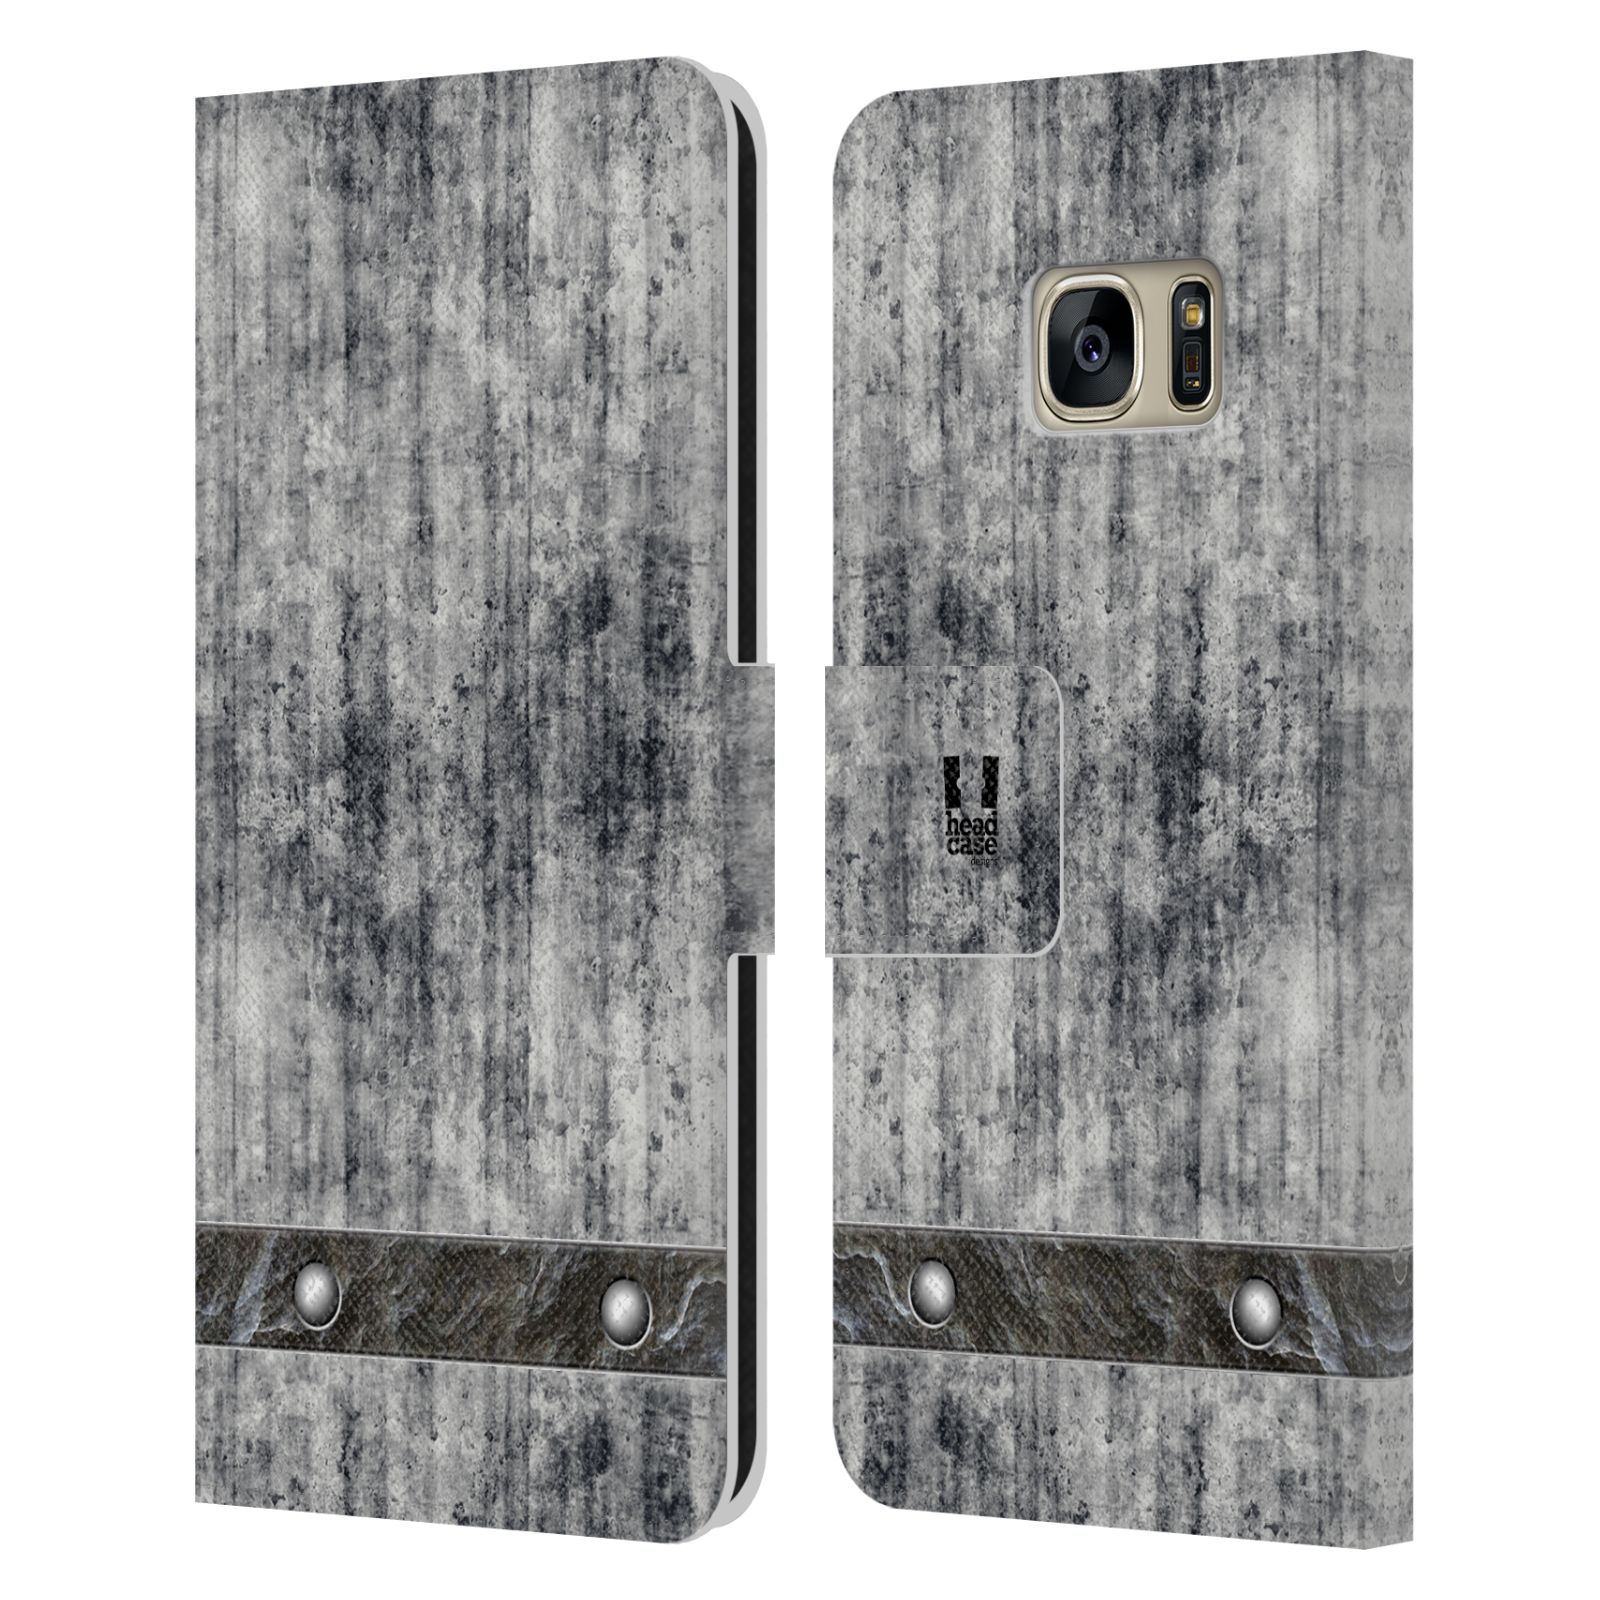 Pouzdro pro mobil Samsung Galaxy S7 - Stavební textura šedý beton